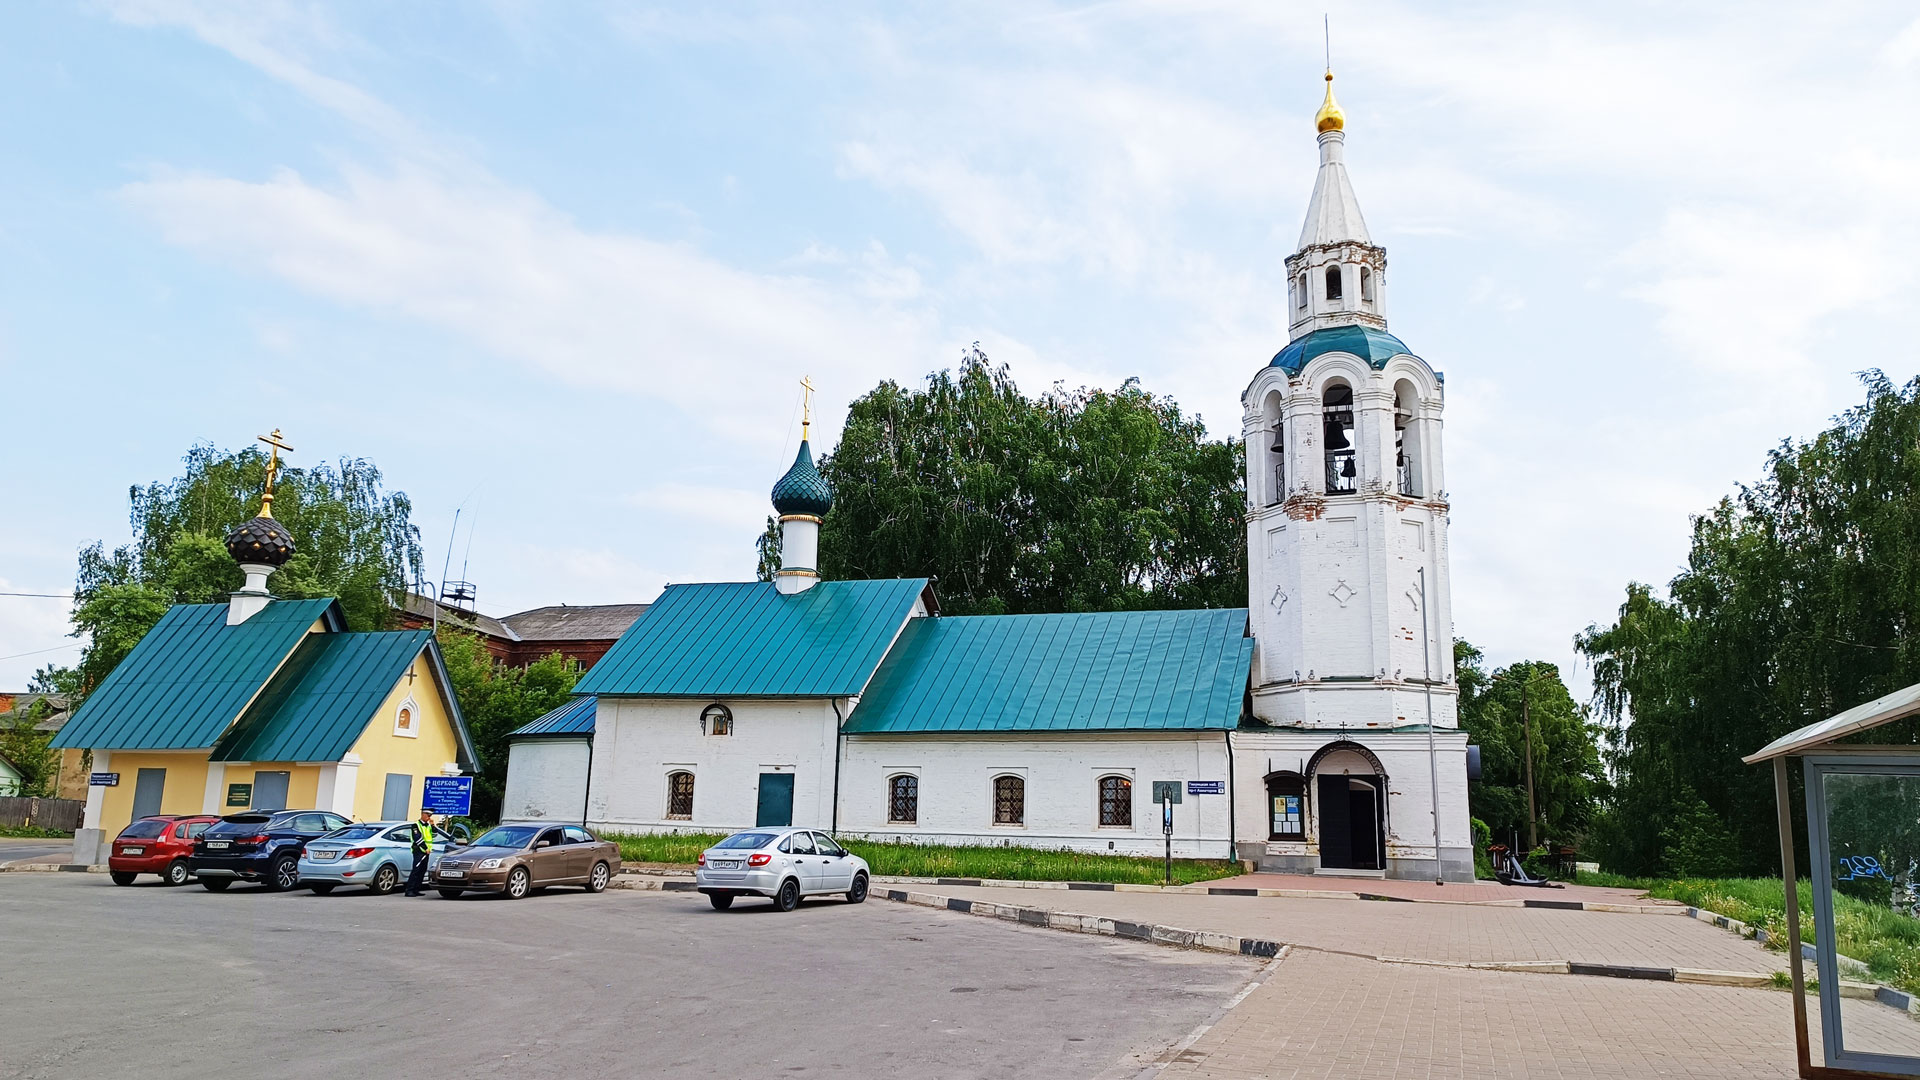 Тверицкая набережная Ярославль: панорамный вид храма. 